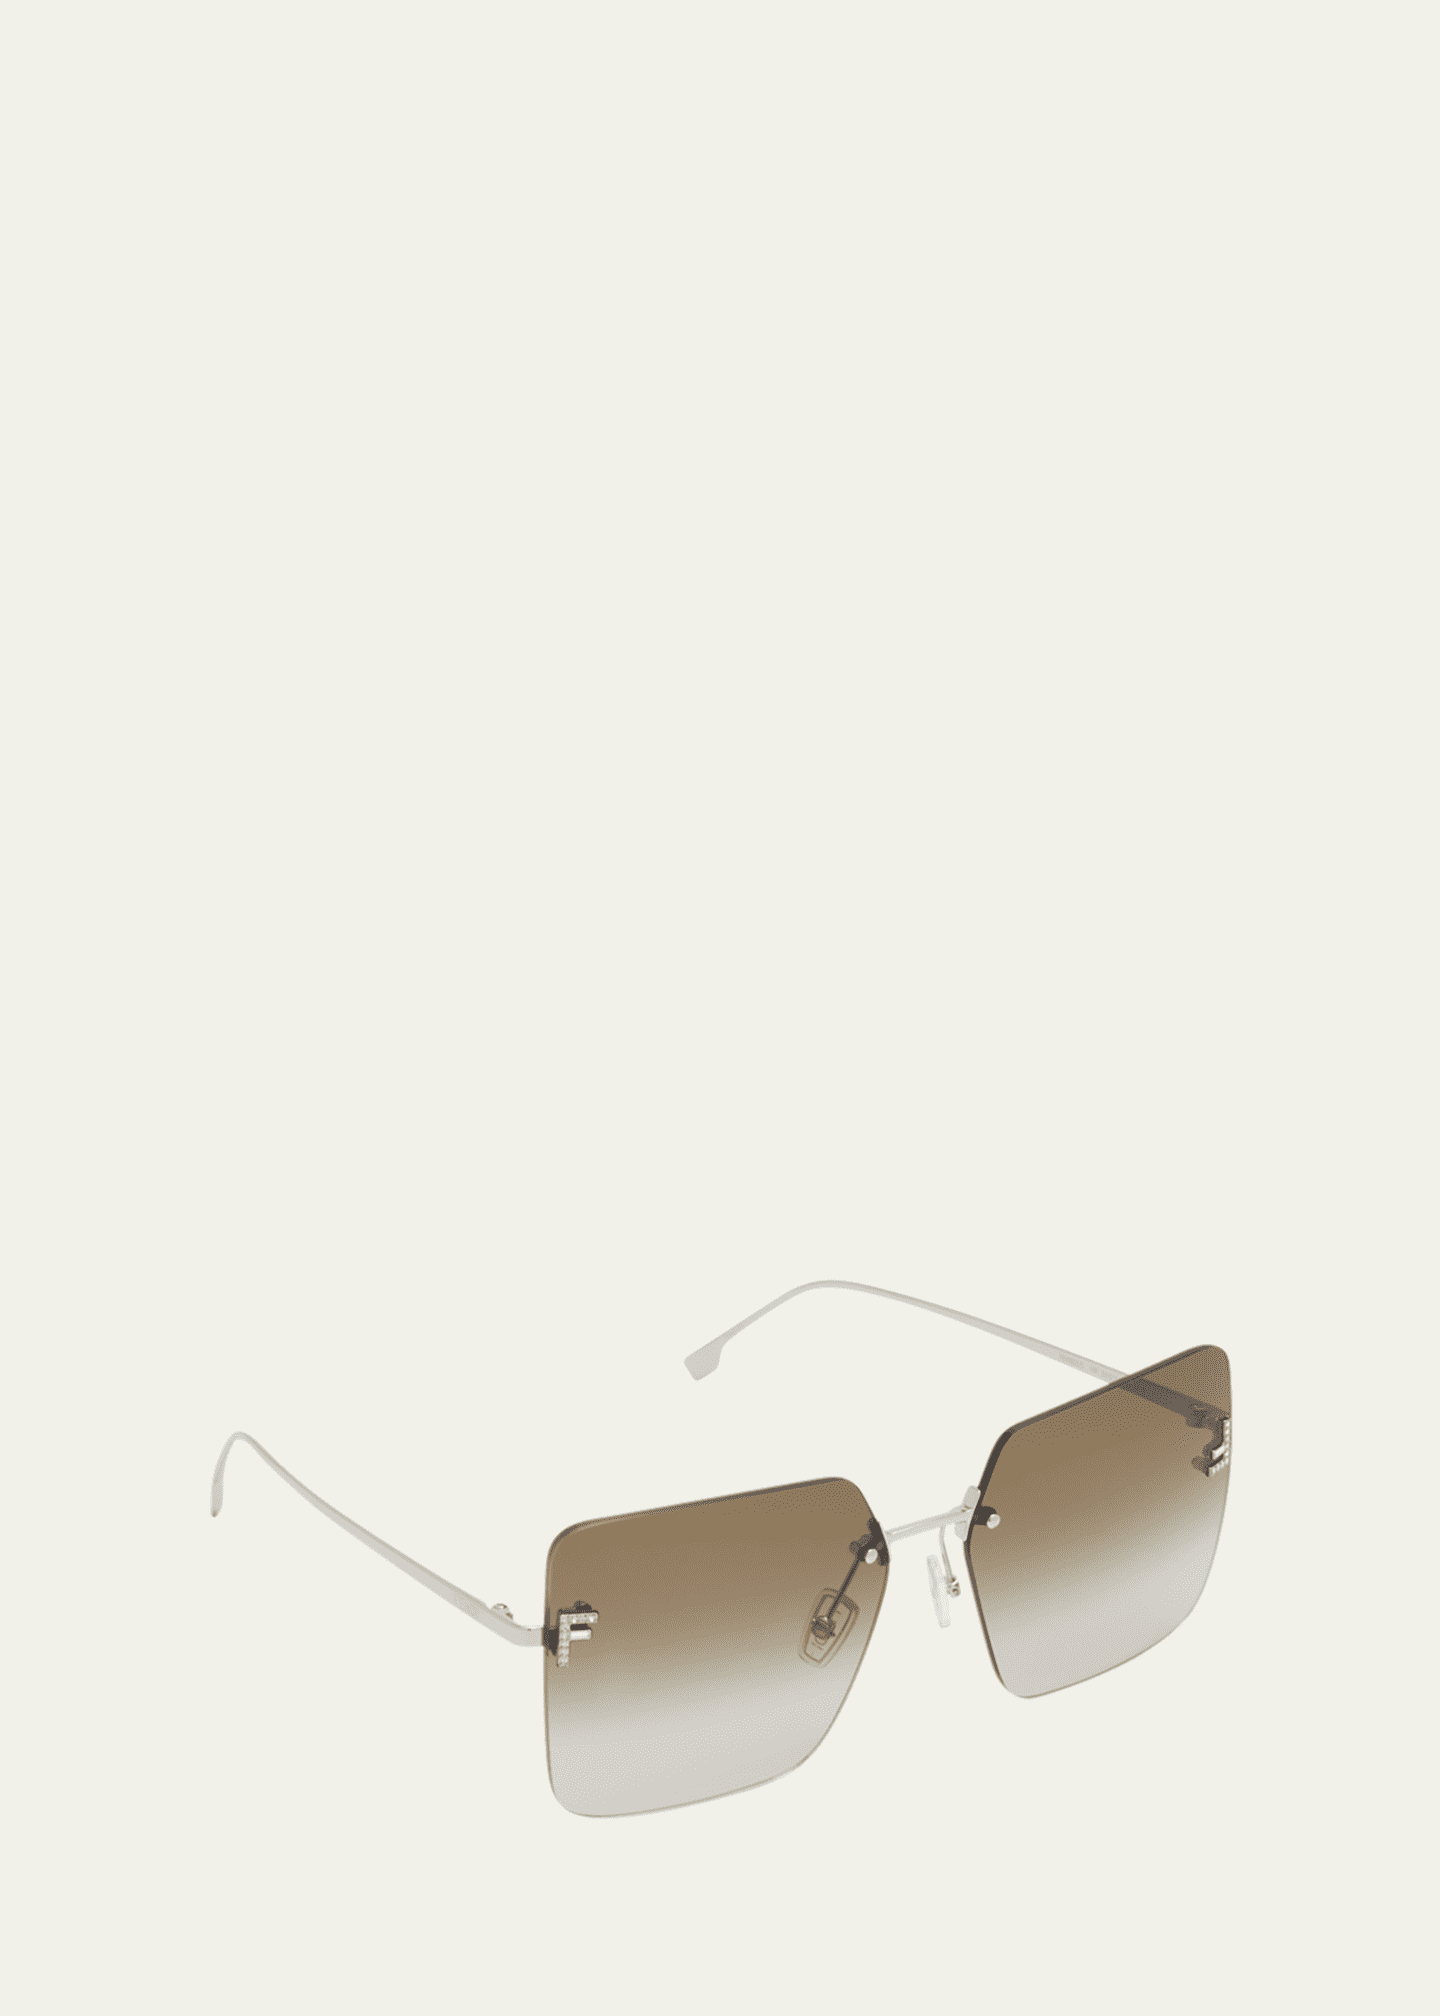 Fendi Women's FE4082US Square Sunglasses